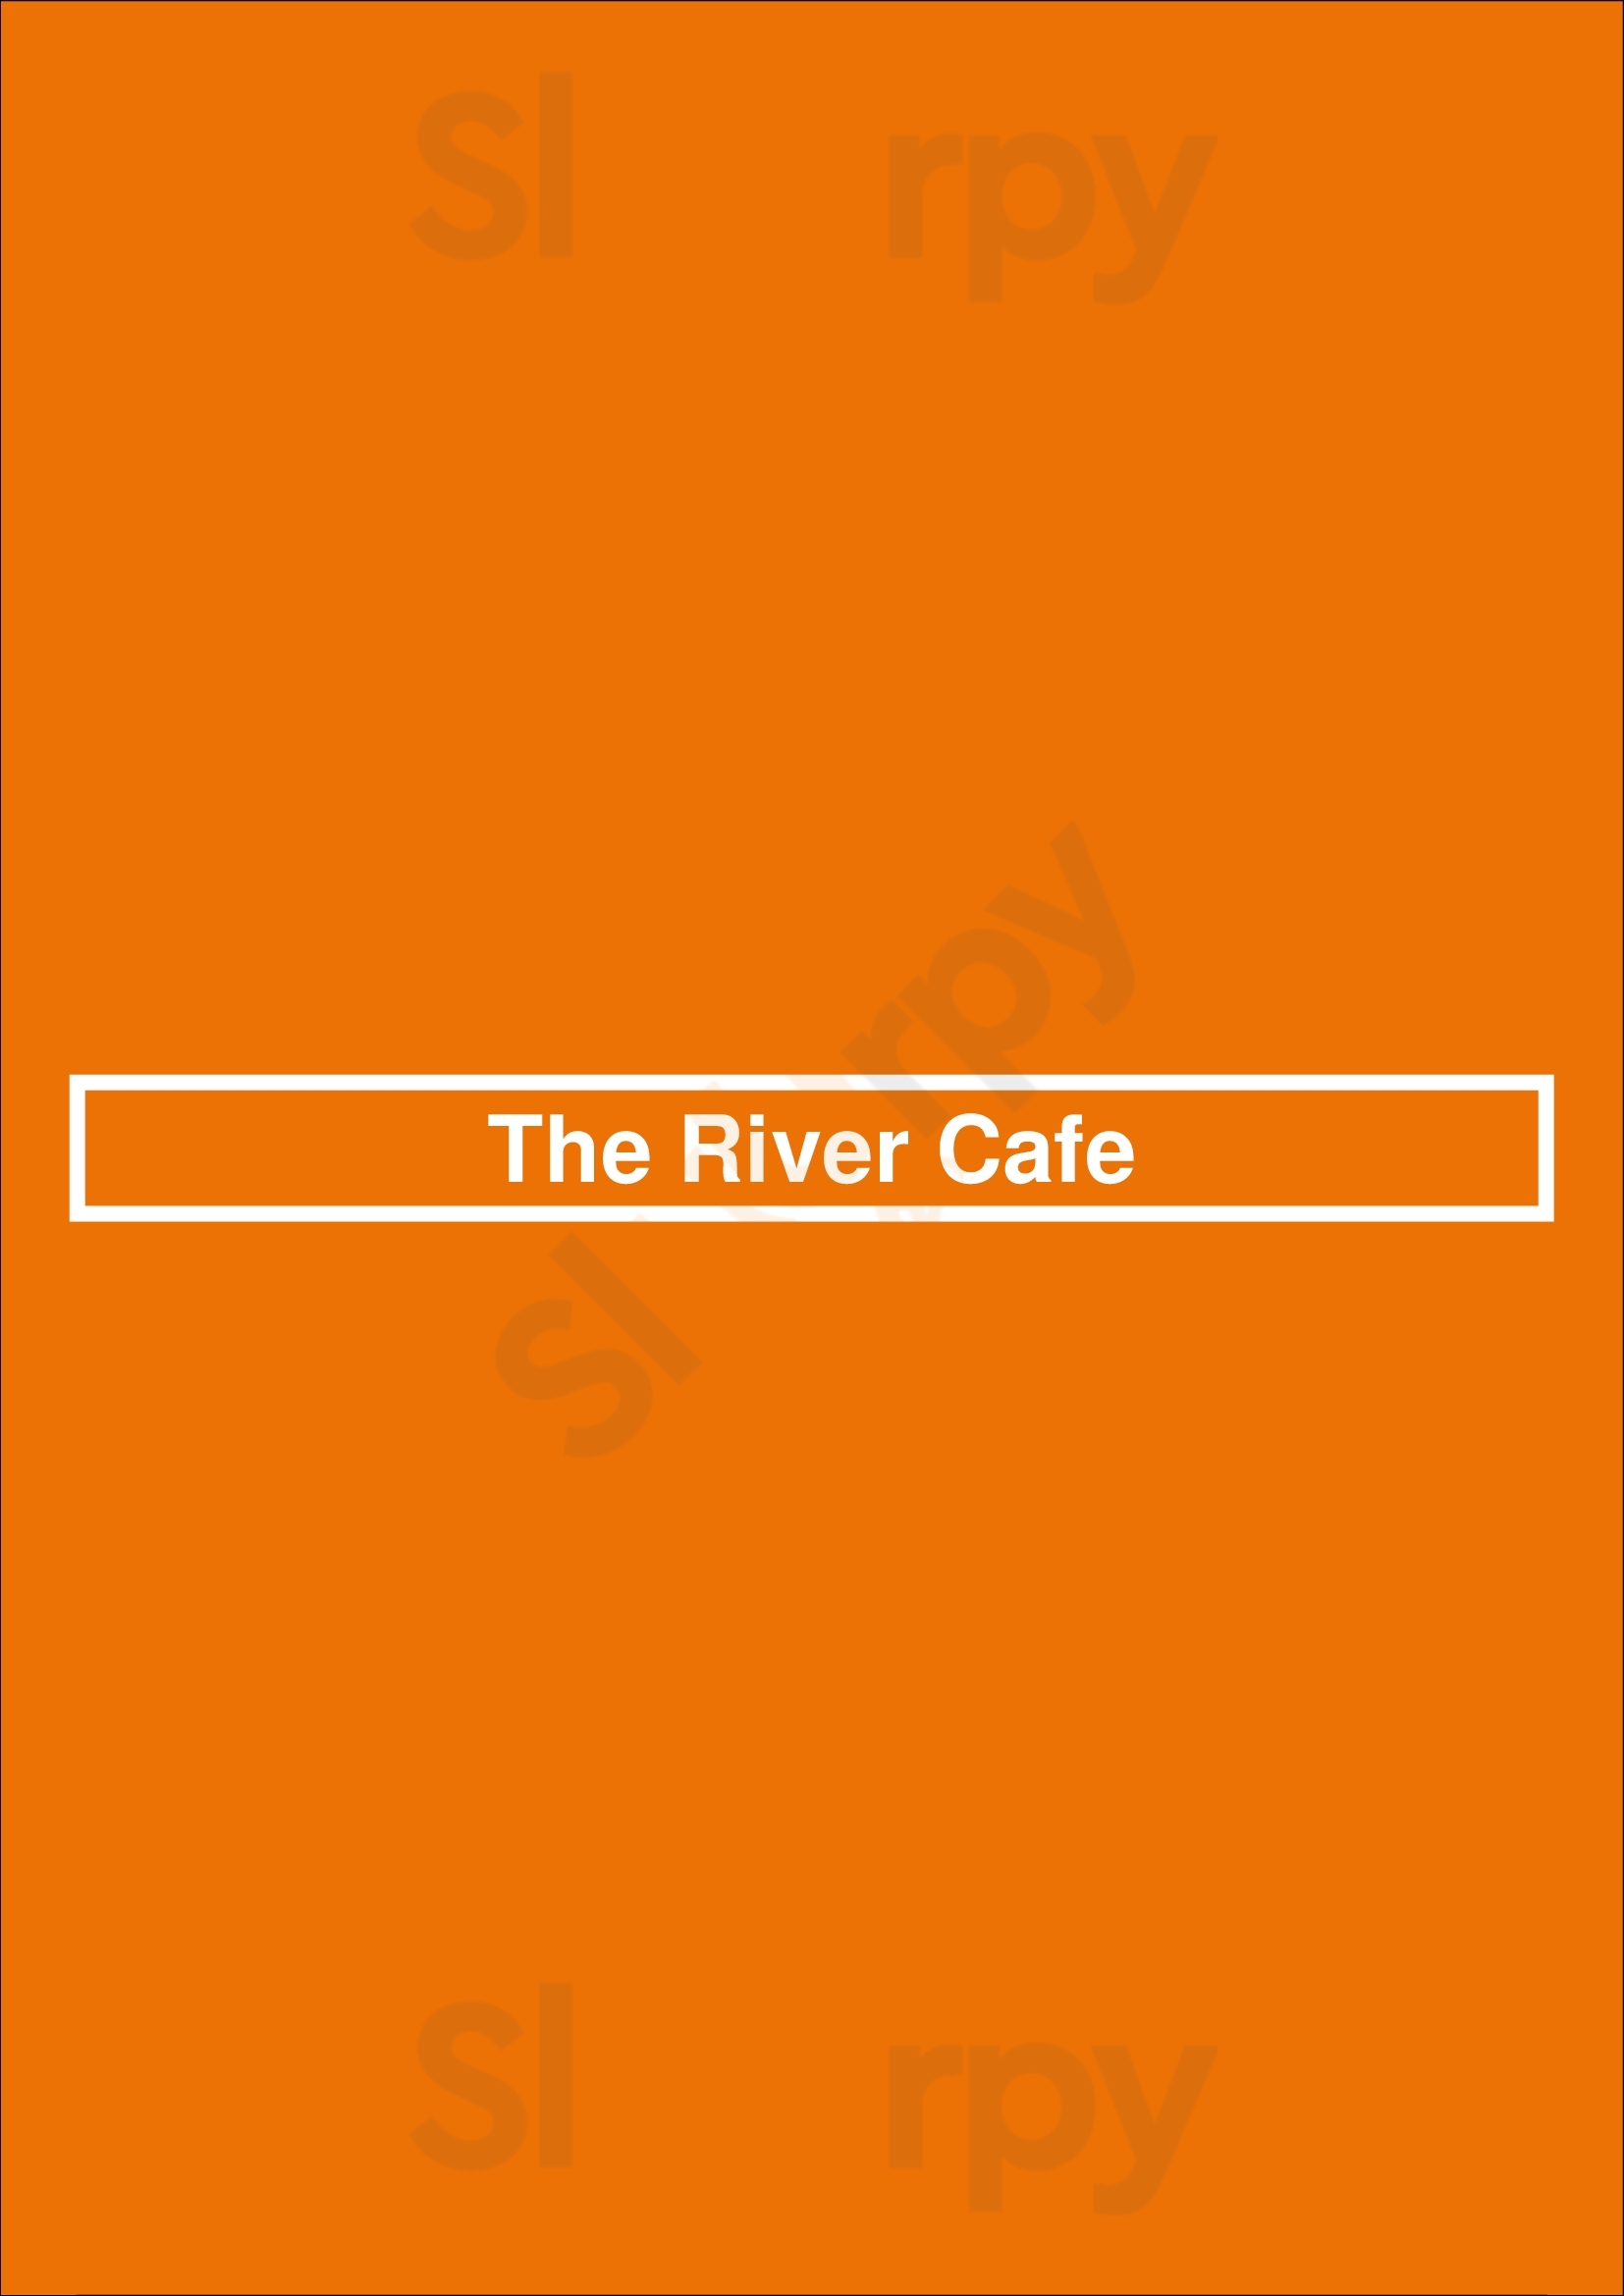 The River Cafe Brooklyn Menu - 1